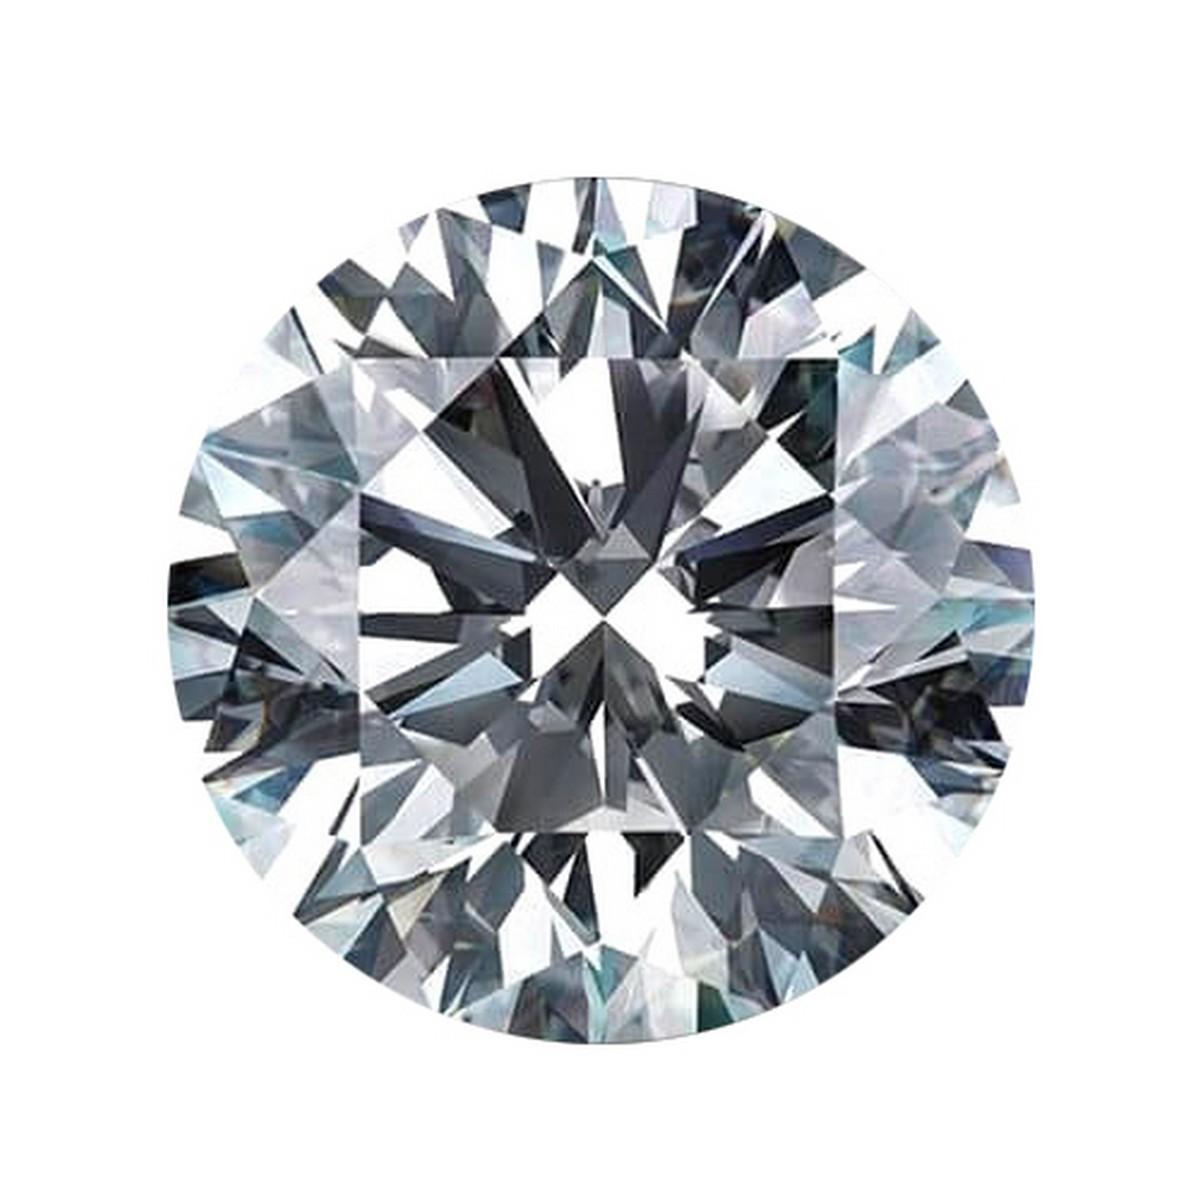 1.26 ctw. VVS2 IGI Certified Round Brilliant Cut Loose Diamond (LAB GROWN)